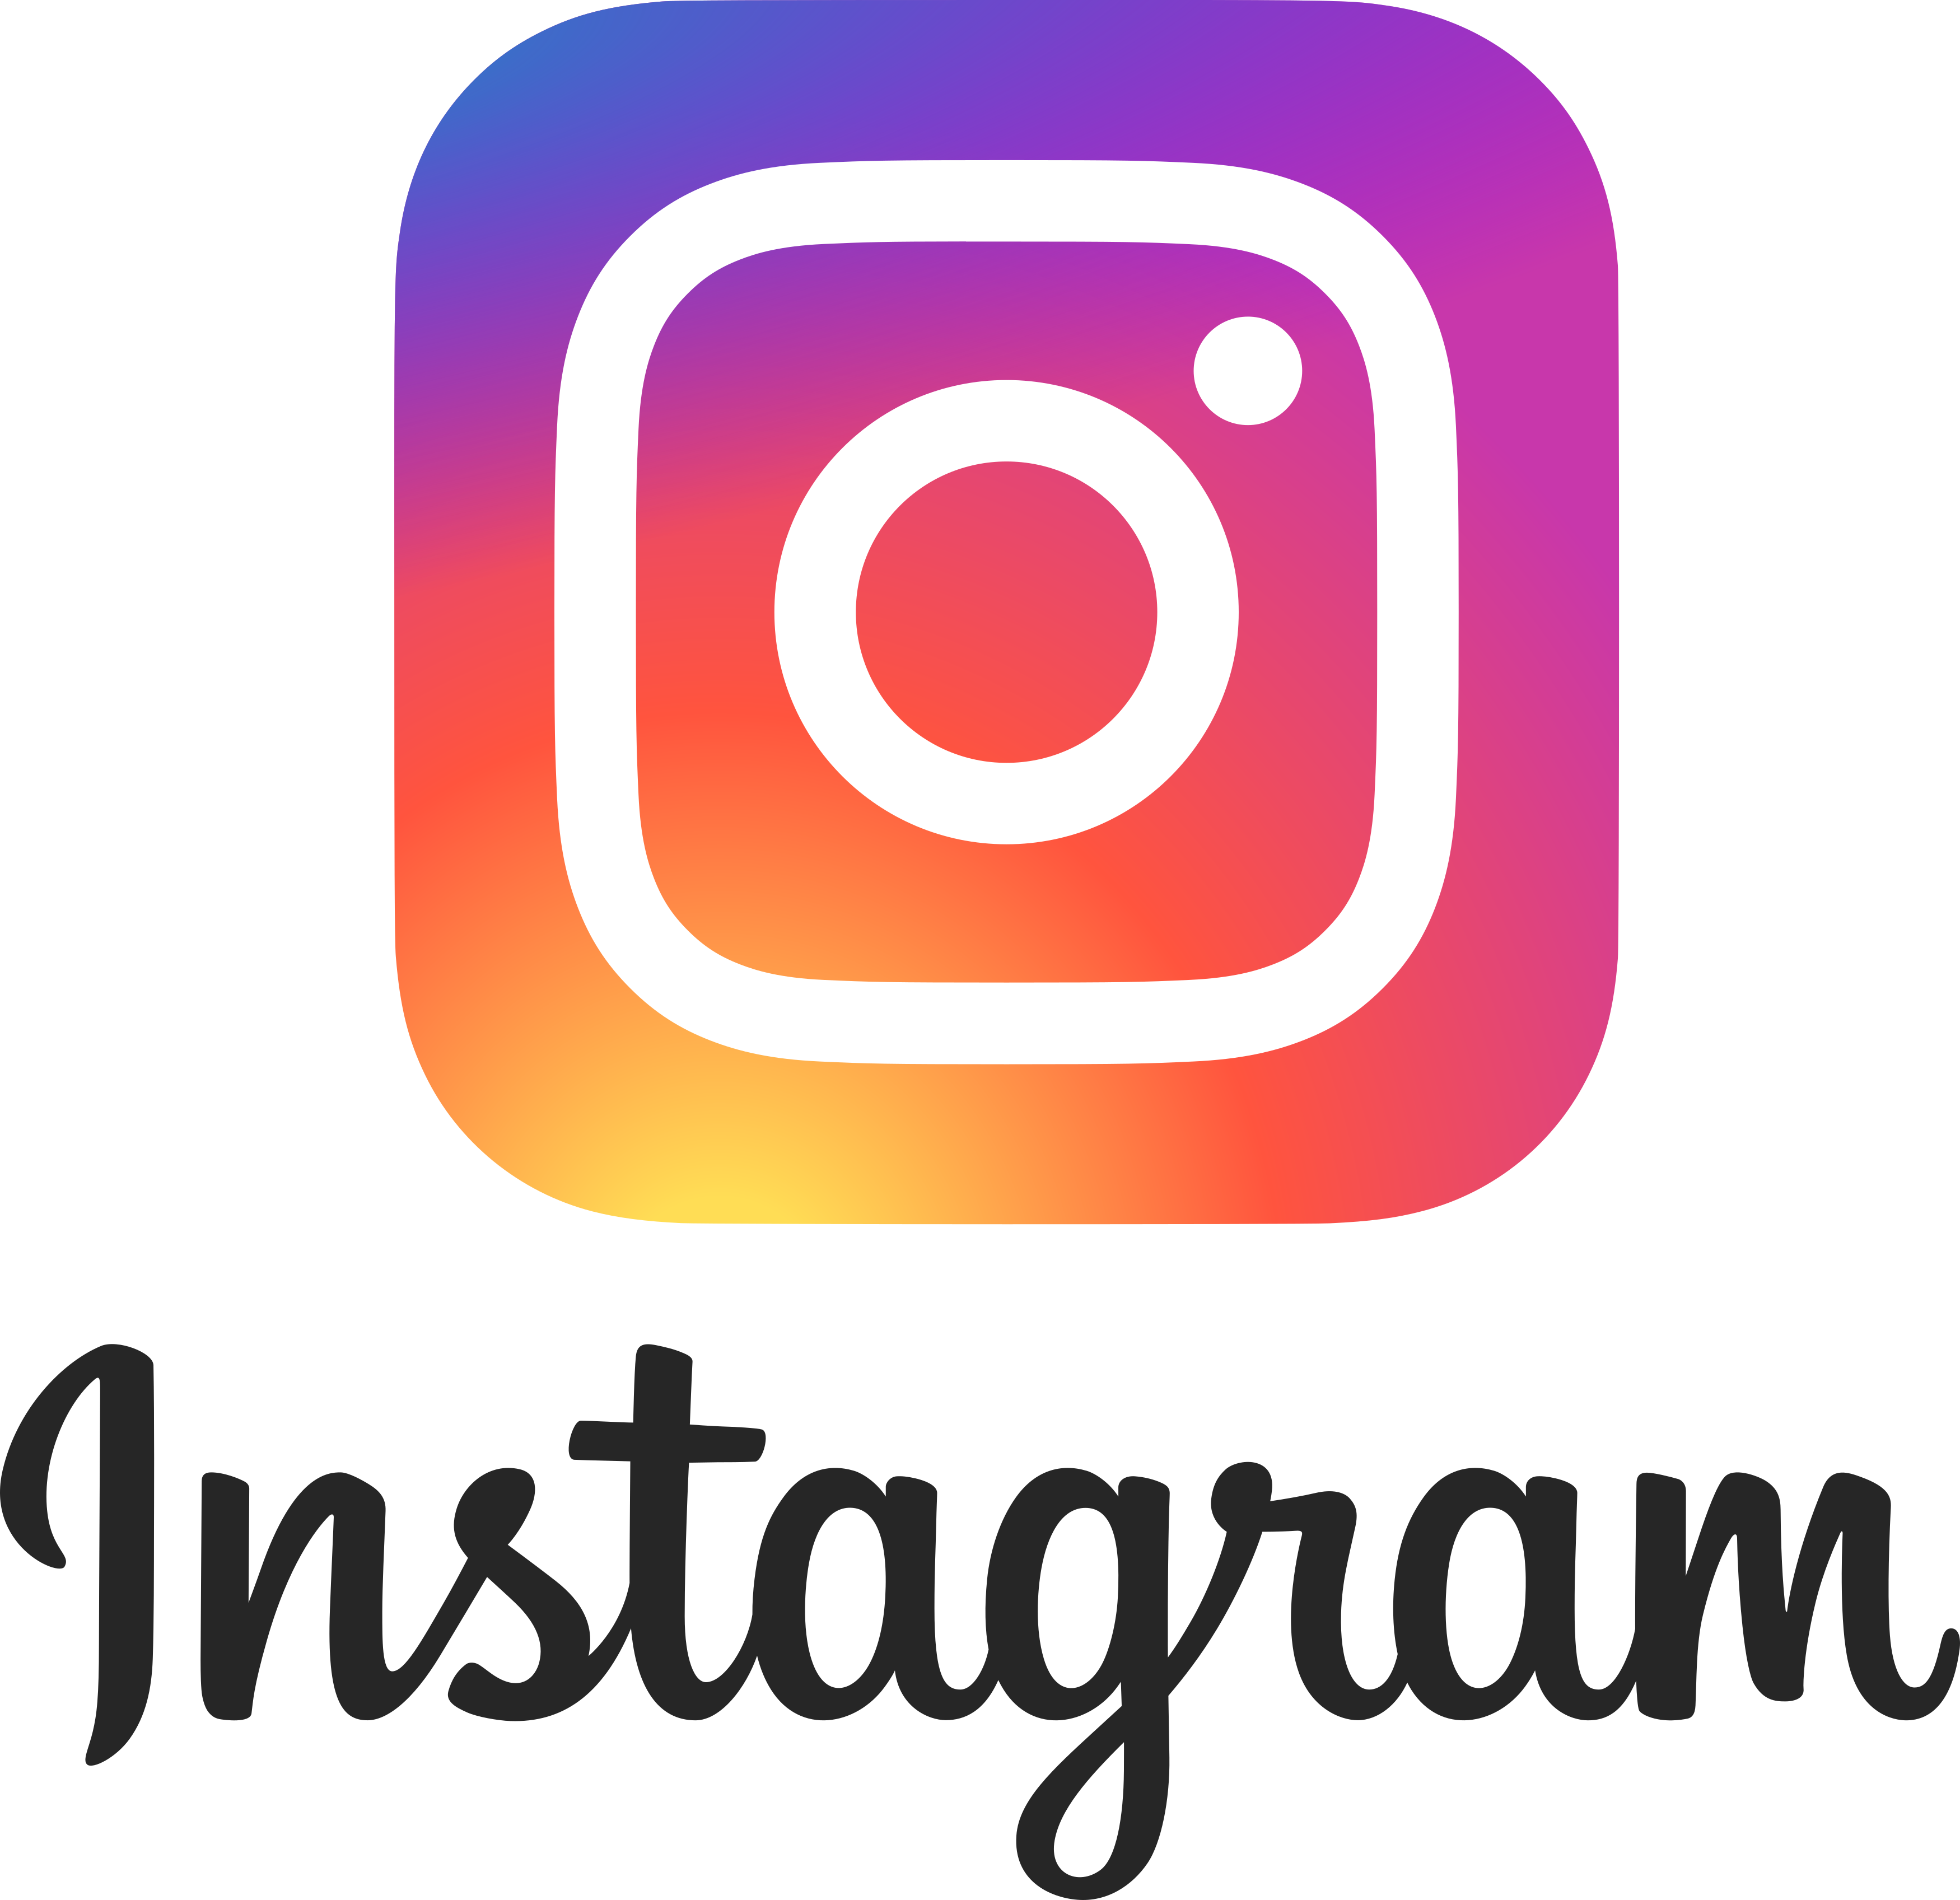 instagram logo for business cards png 2